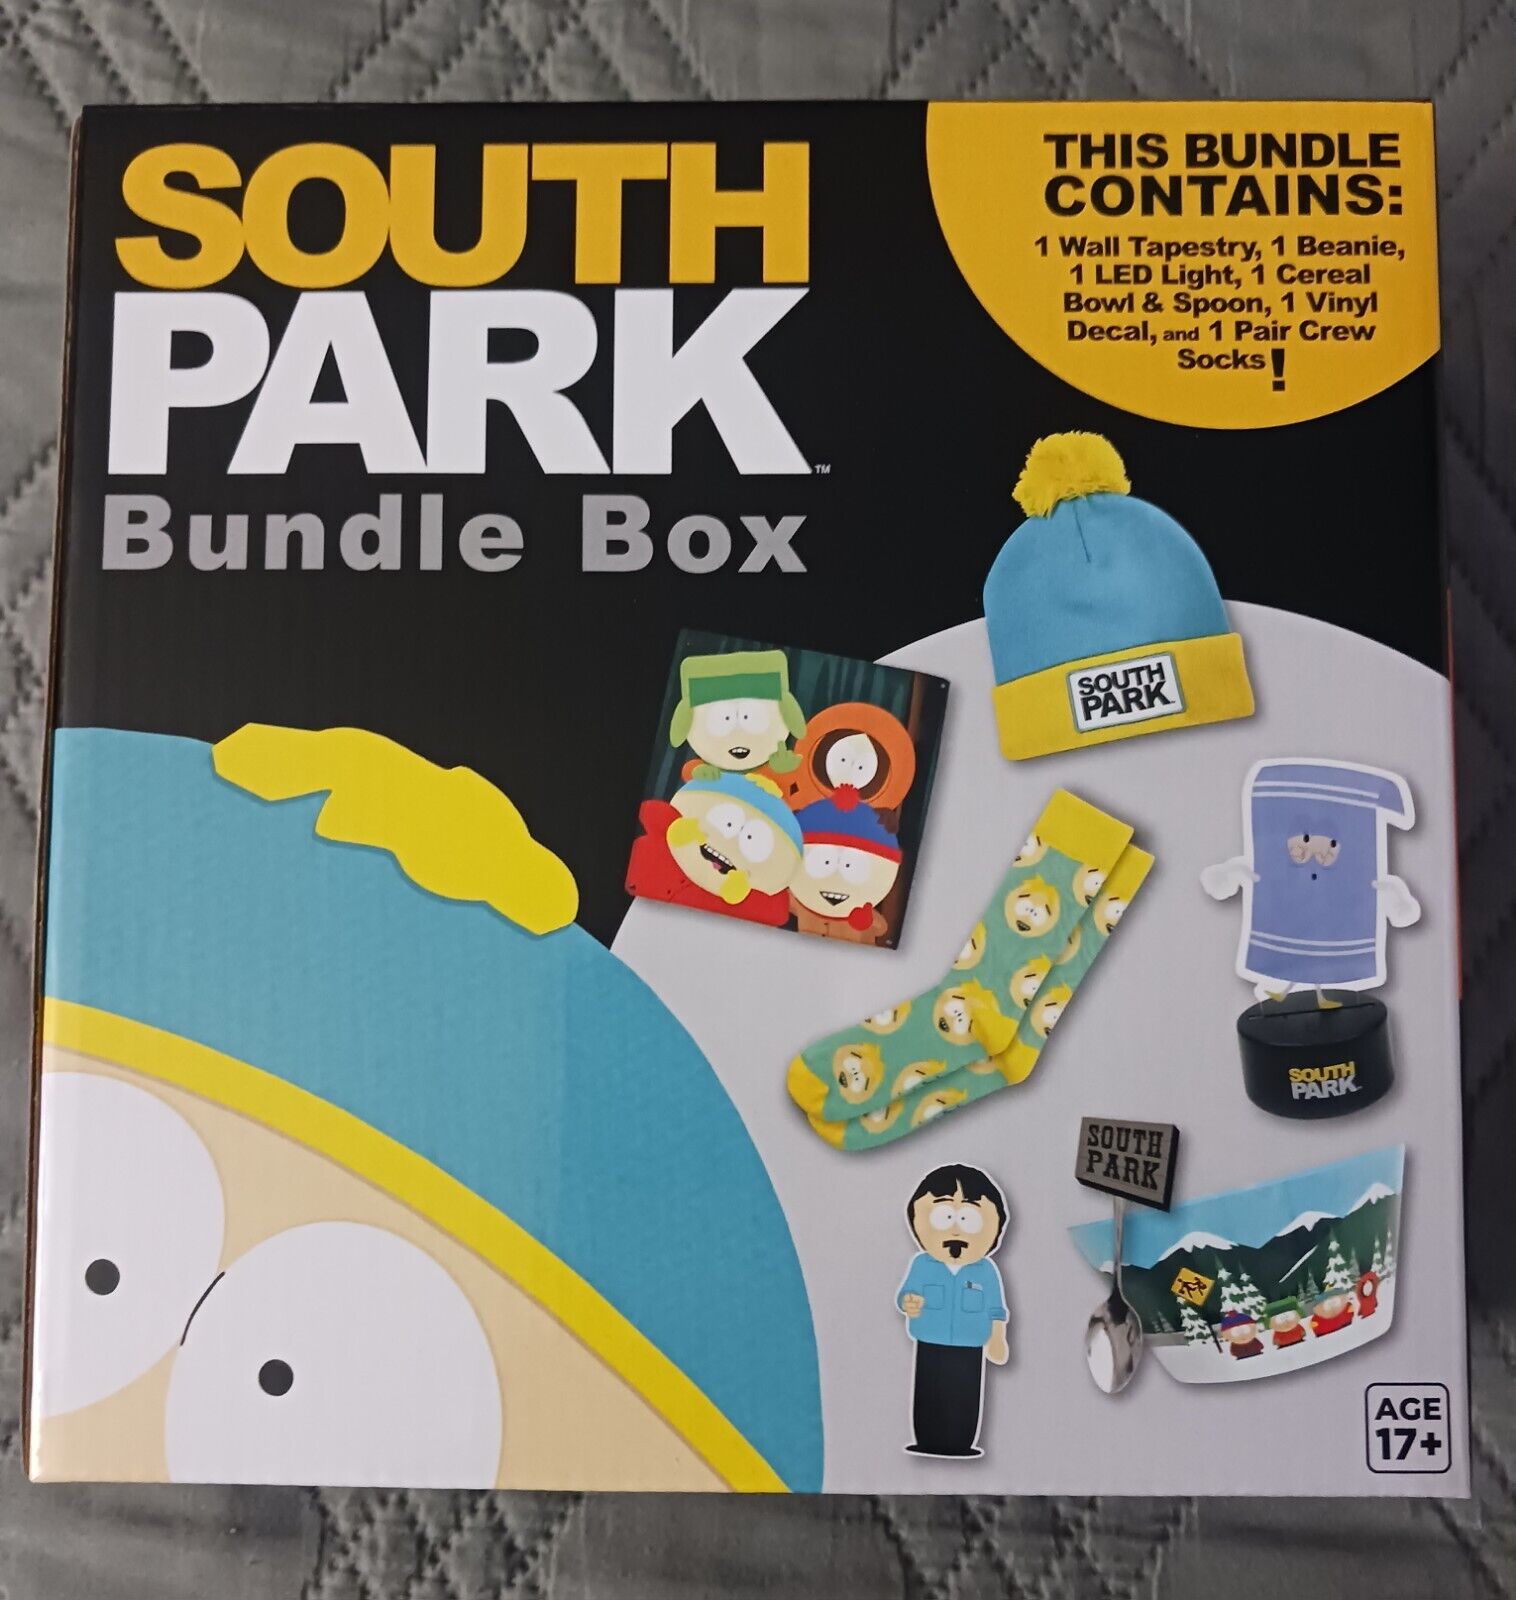 Culturefly's Hella Cool South Park Bundle Box  7 New South Park Items Get It Now